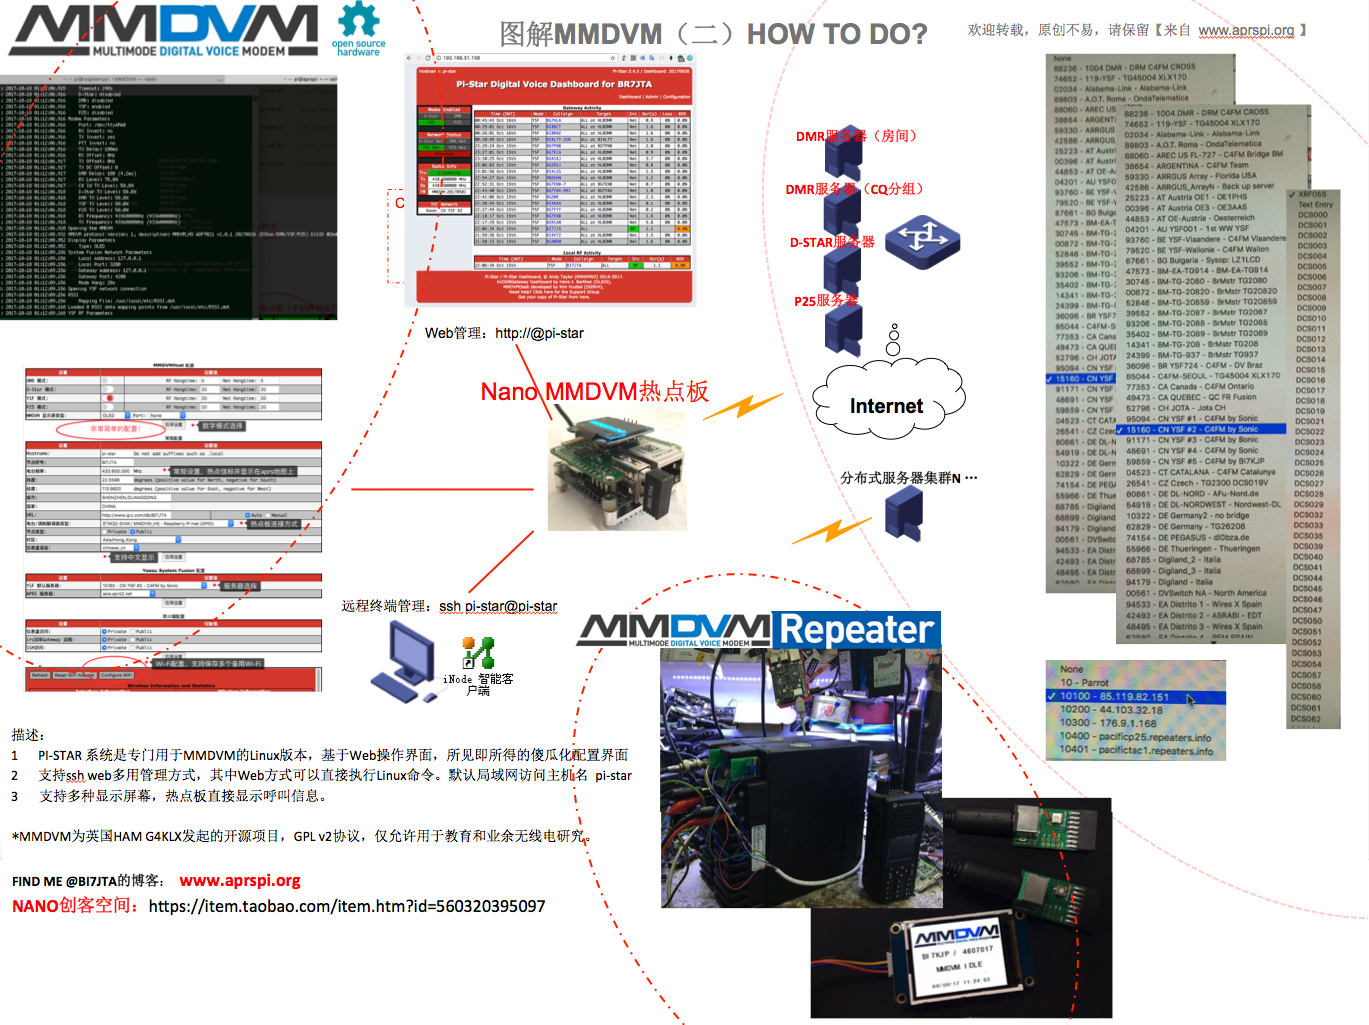 MMDVM （Multi-Mode Digital Voice Modem）